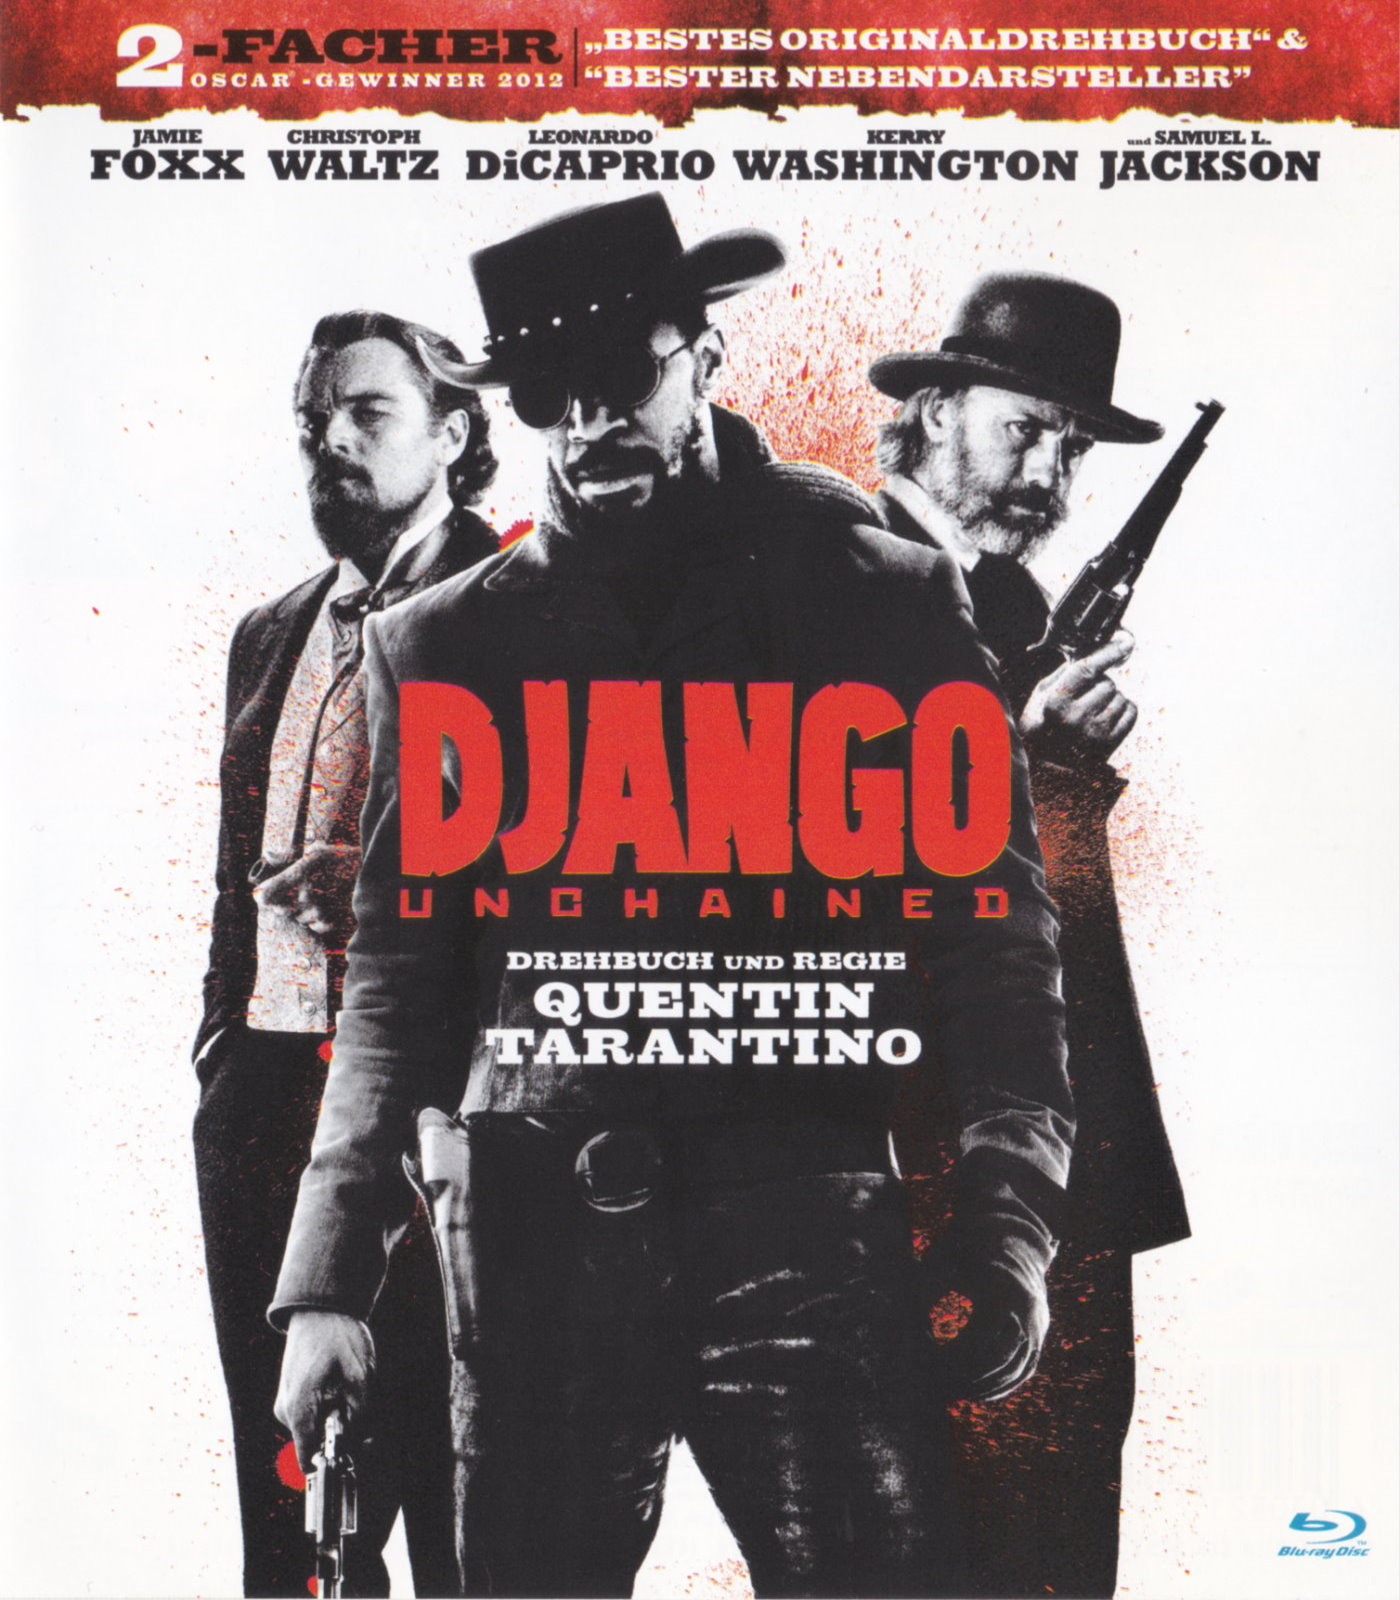 Cover - Django Unchained.jpg